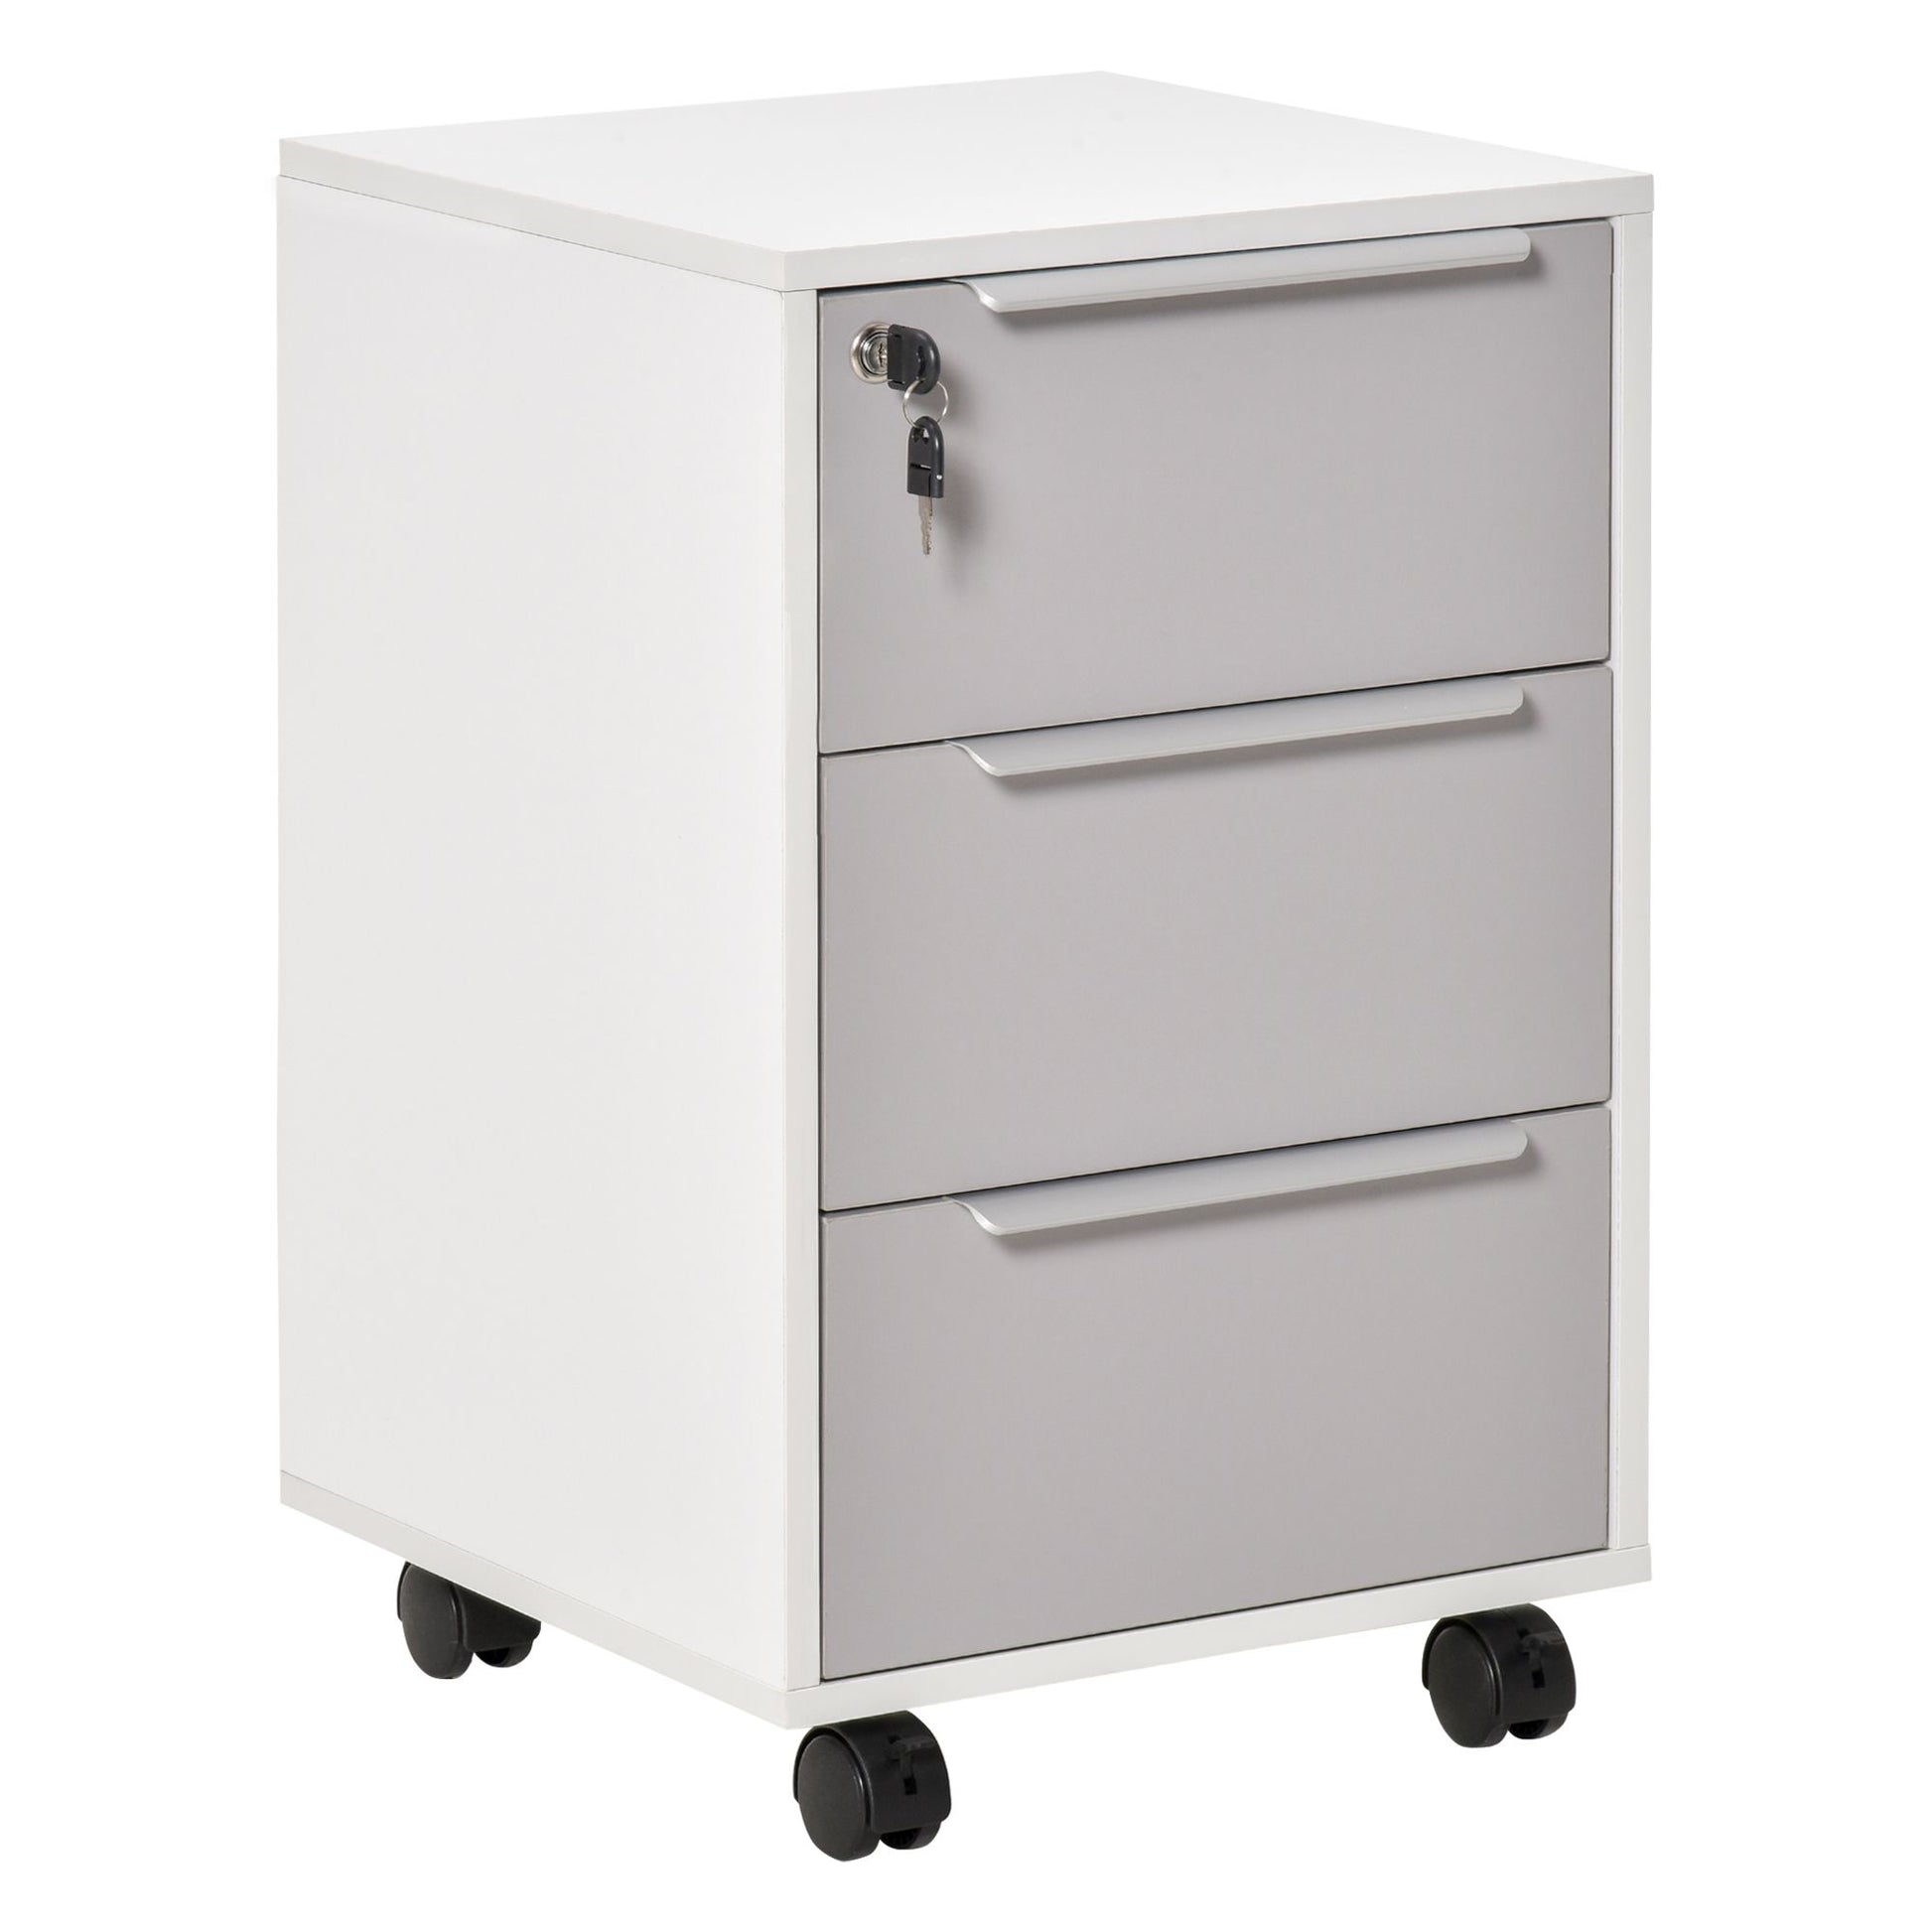 ProperAV Extra 3-Drawer Locking Mobile Filing Cabinet with Wheels - White - maplin.co.uk